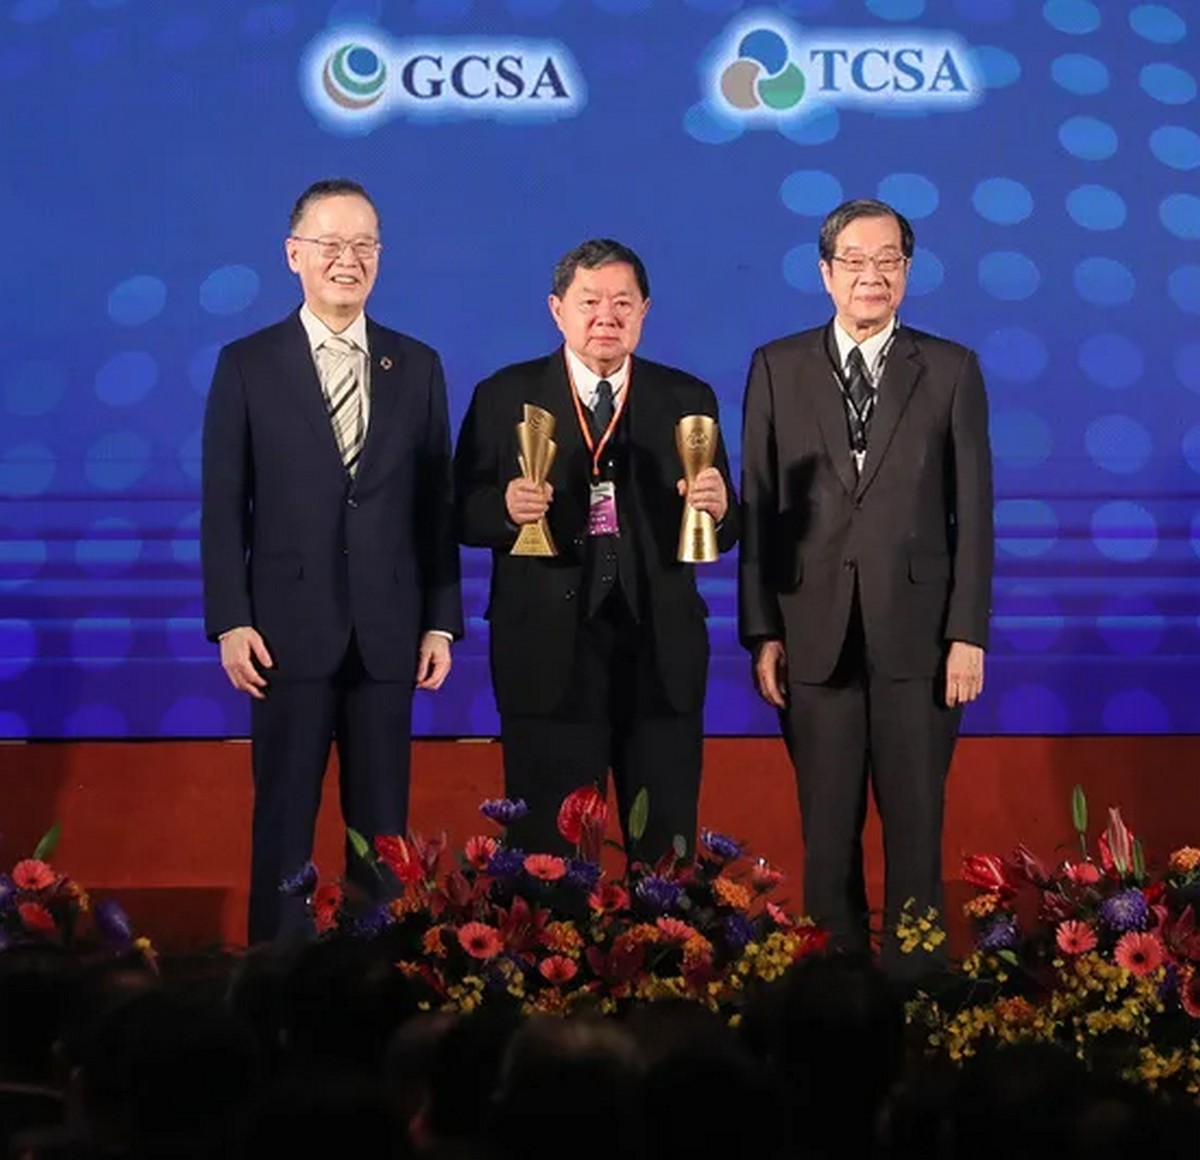 FEG own the most of 2022 GCSA & TCSA Awards among contestants